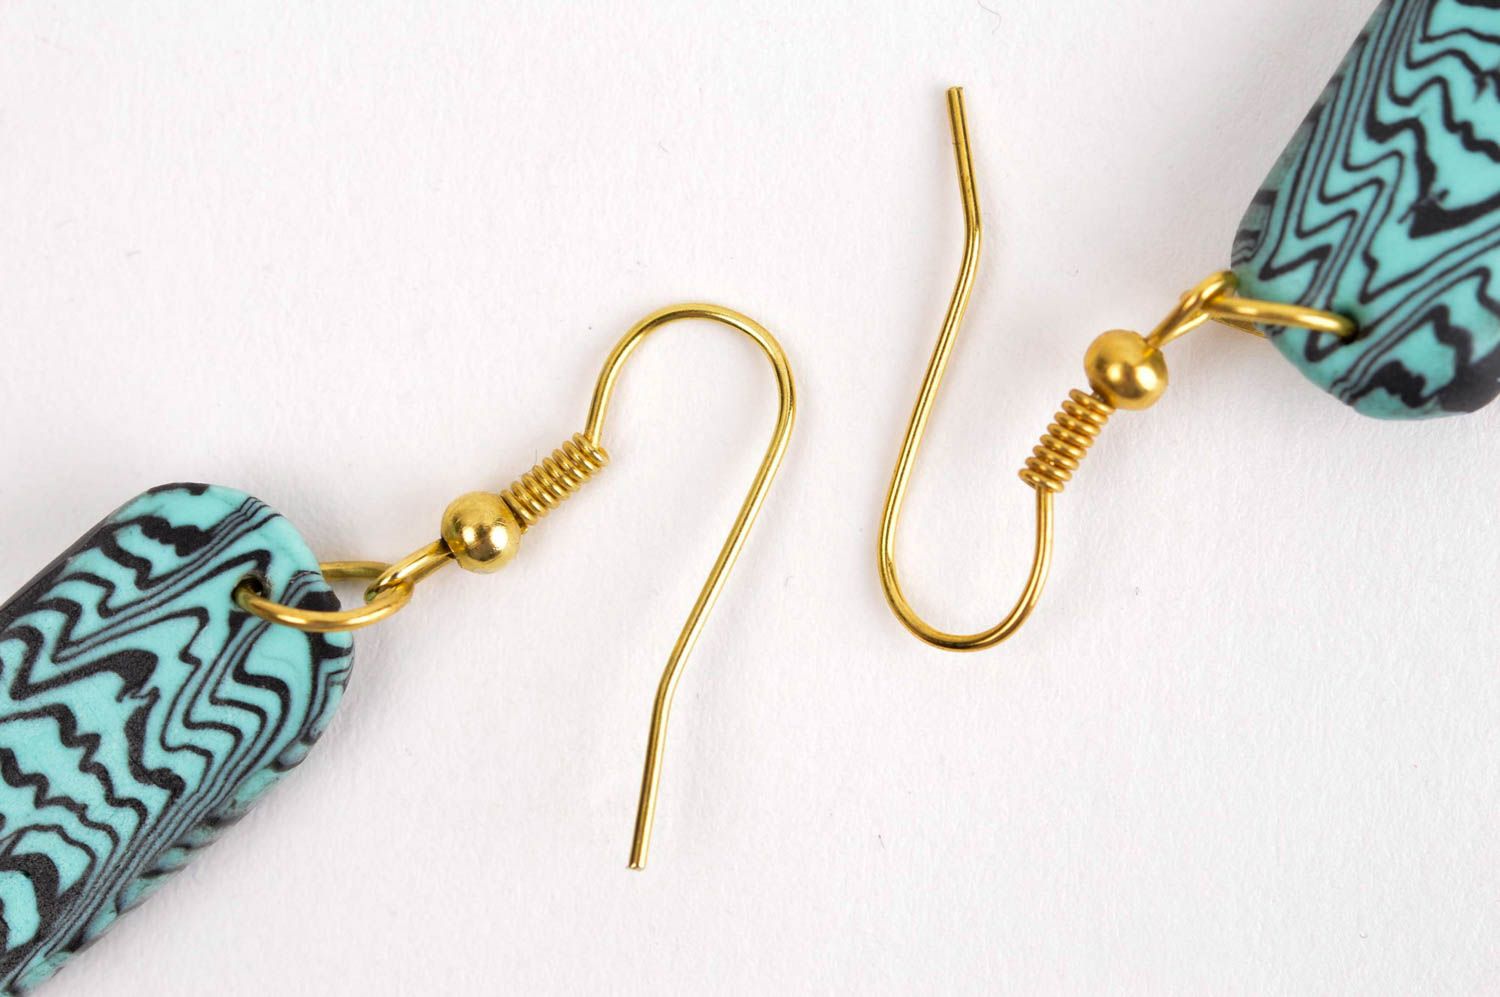 Handmade earrings designer accessory gift ideas beautiful jewelry clay earrings photo 4